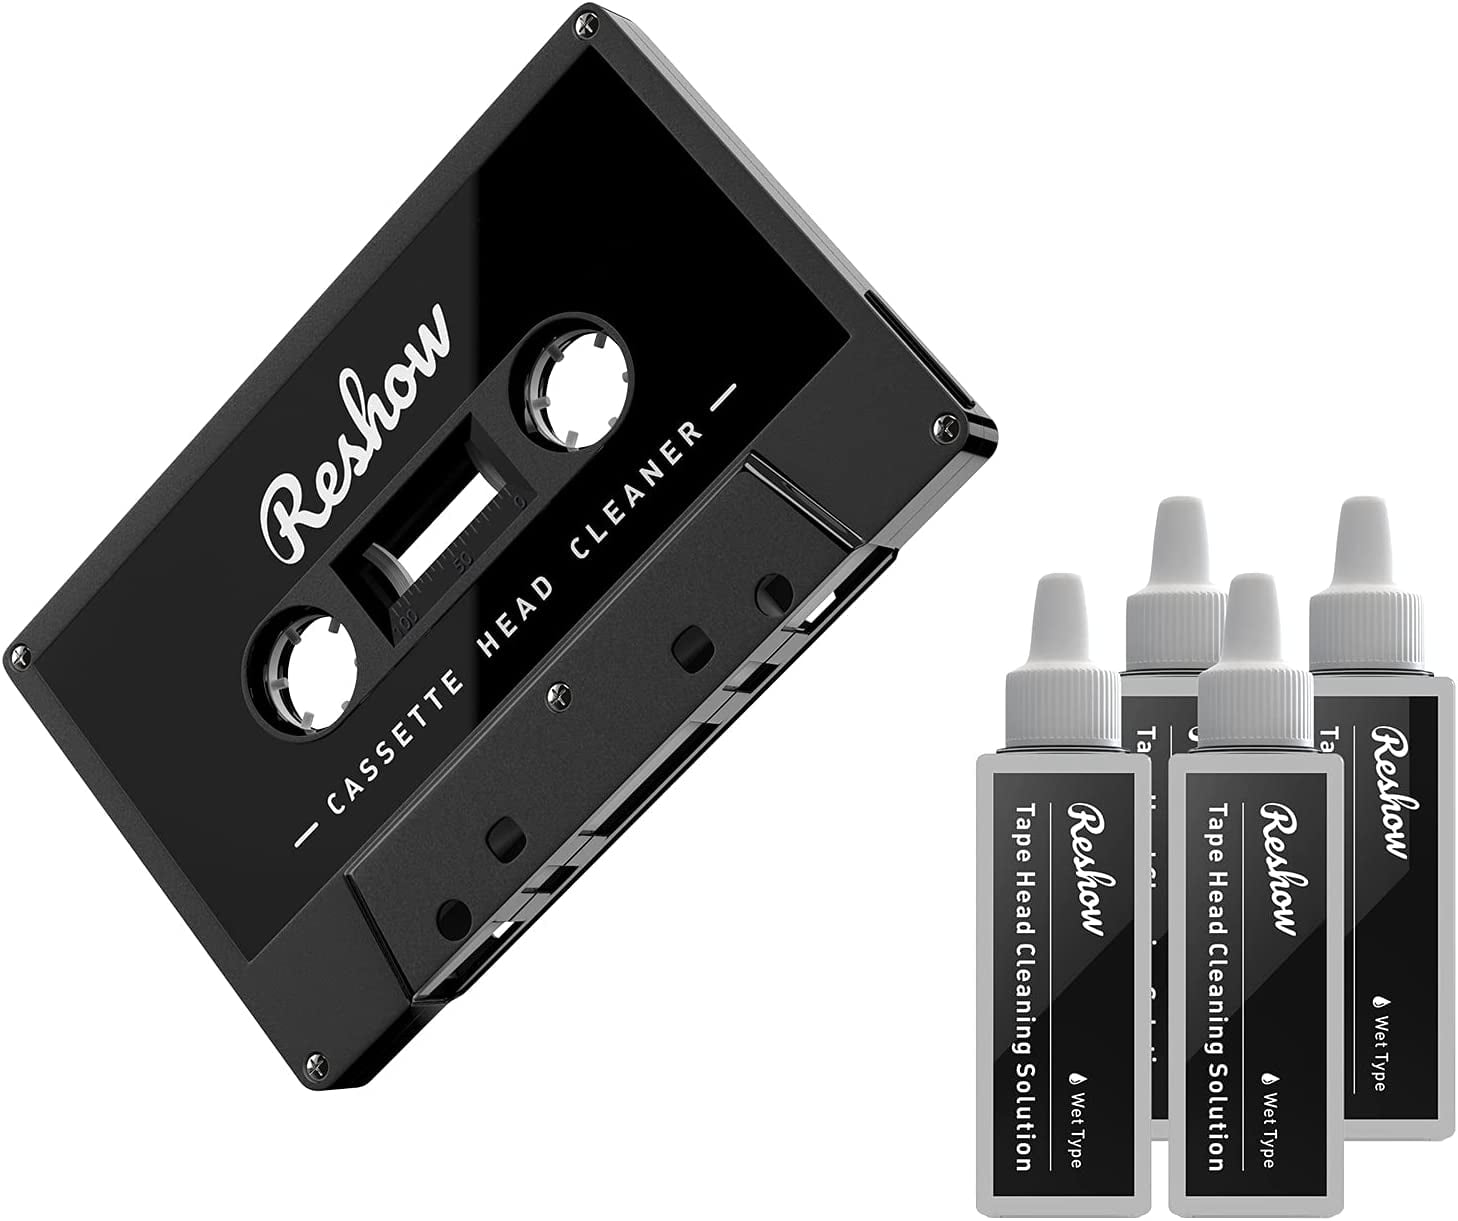 Reshow Audio Tape Cette Head Cleaner w/ 2 Fluids Care Wet Maintenance Kit  for Cette Tape